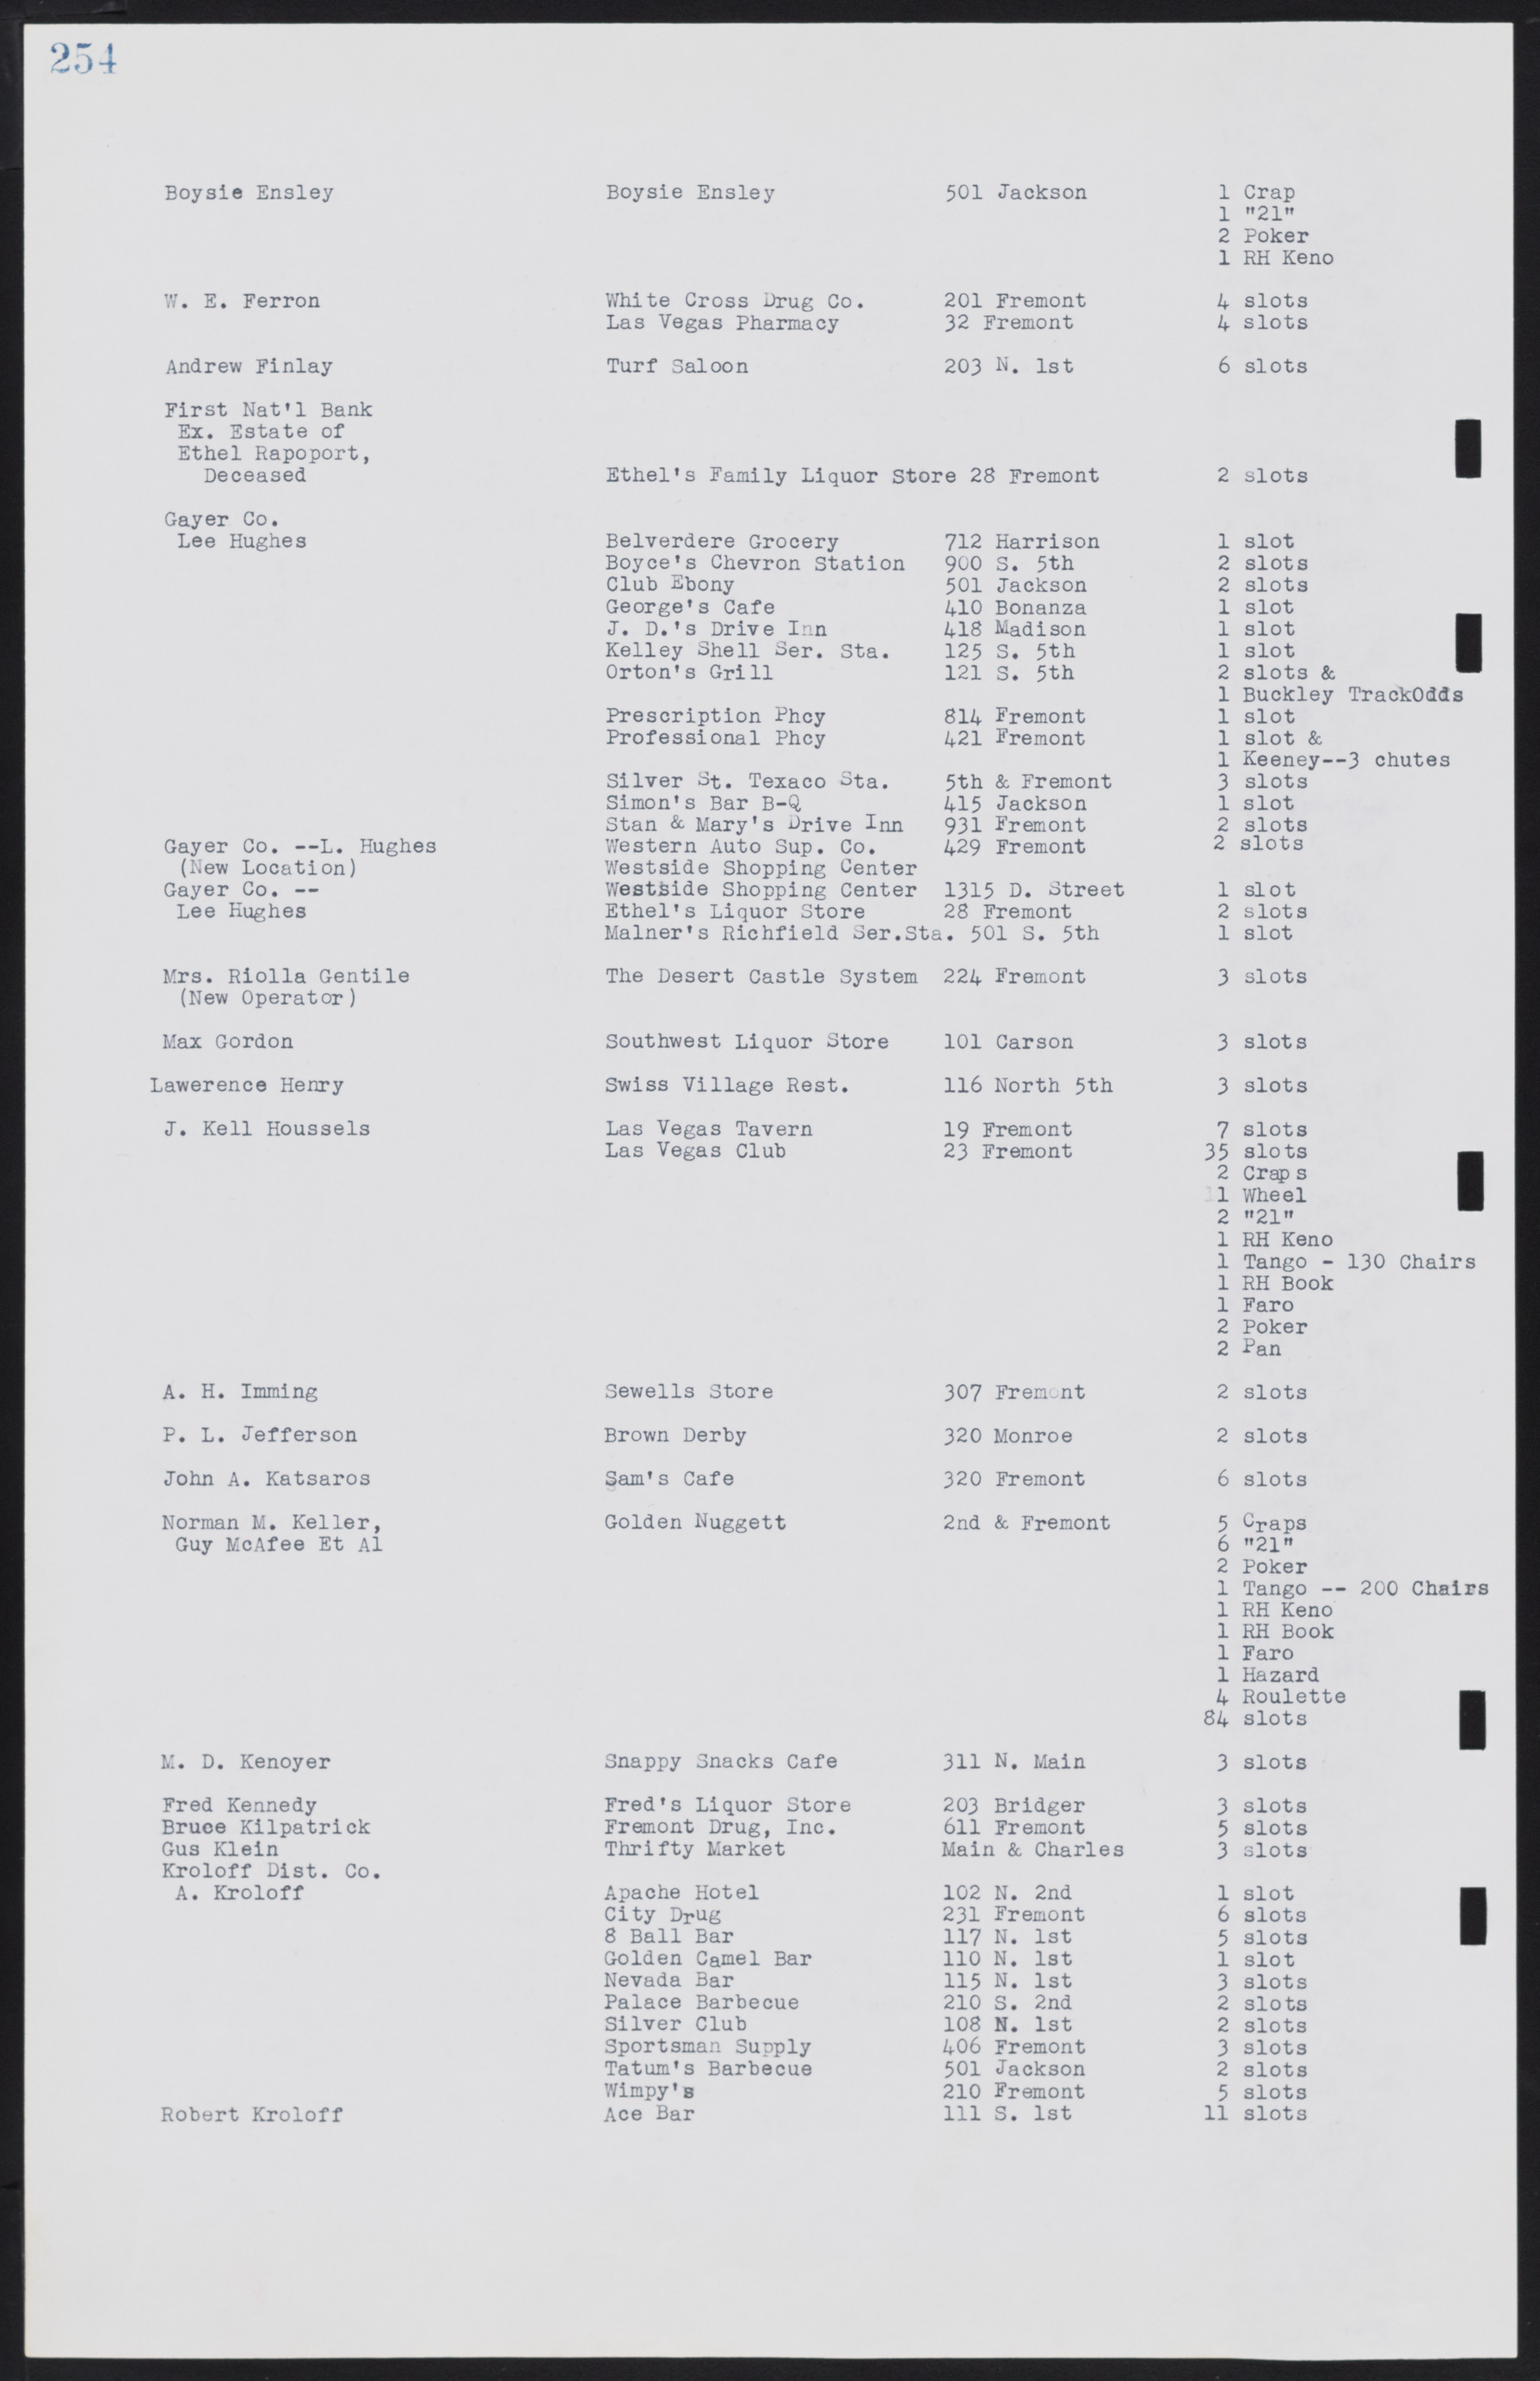 Las Vegas City Commission Minutes, January 7, 1947 to October 26, 1949, lvc000006-276